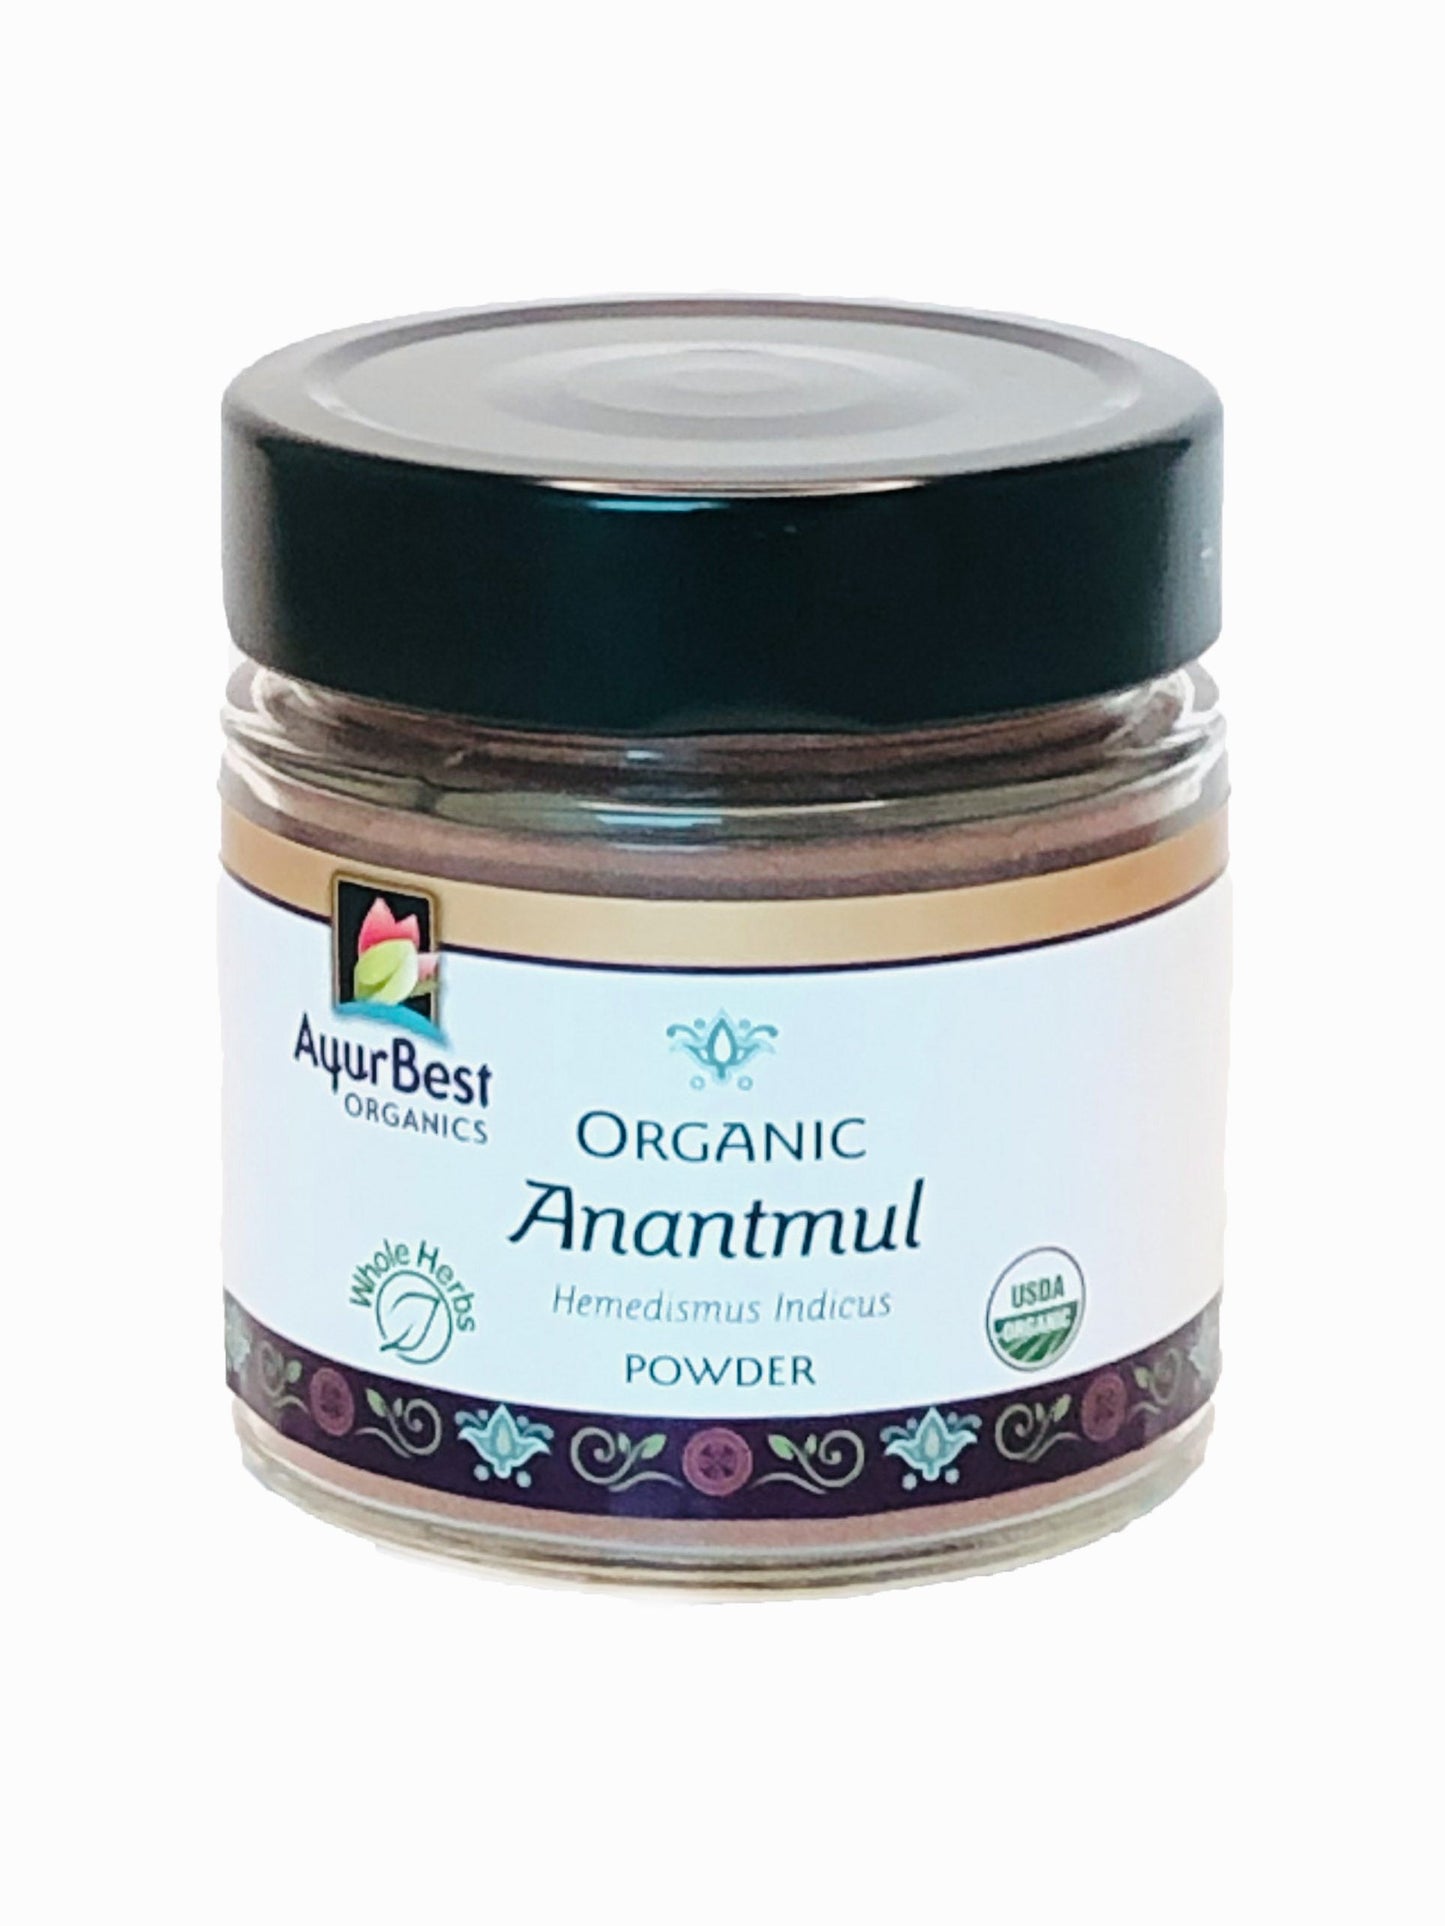 Wholesale Spices & Herbs - Anantmul Powder, Organic 3.7oz (103.6g) Jar